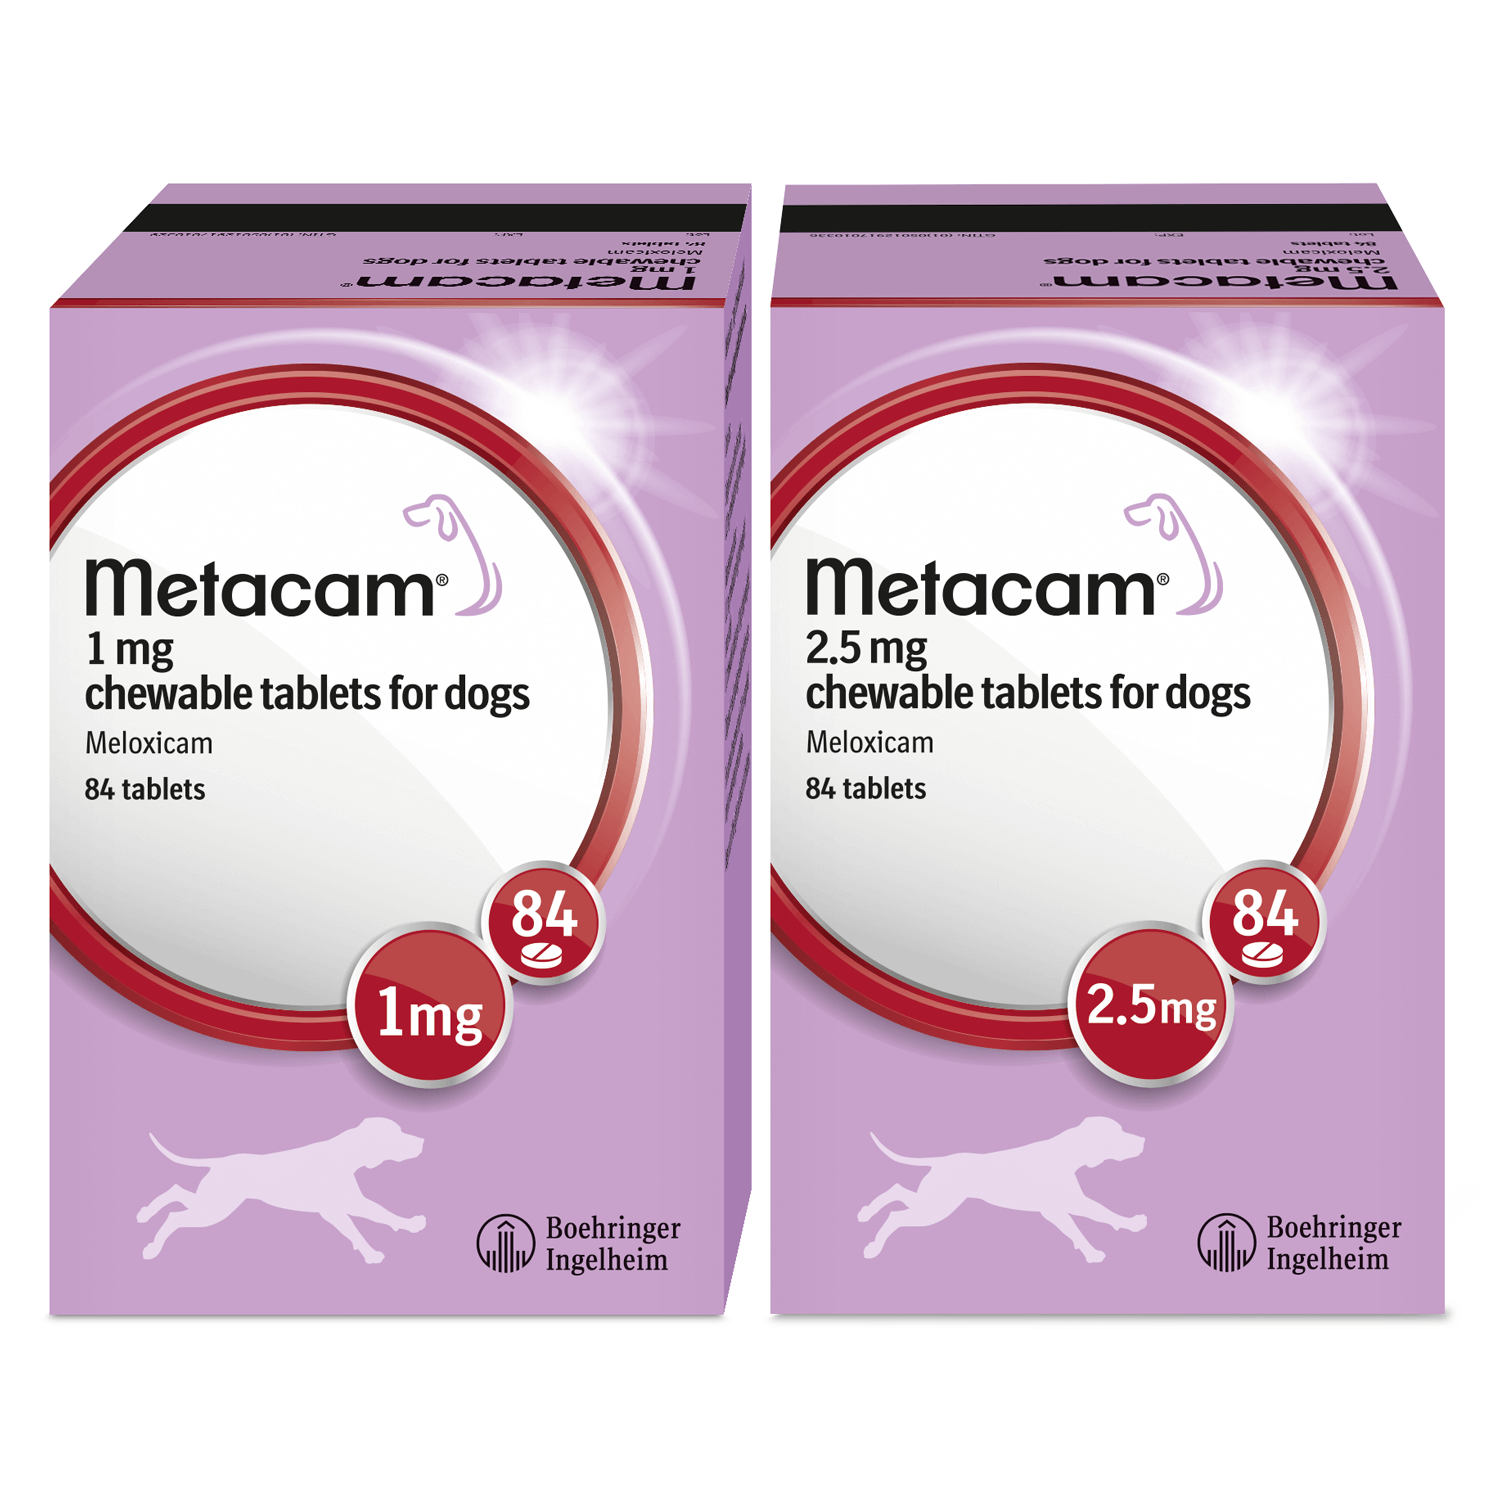 metacam chewable tablets product packaging